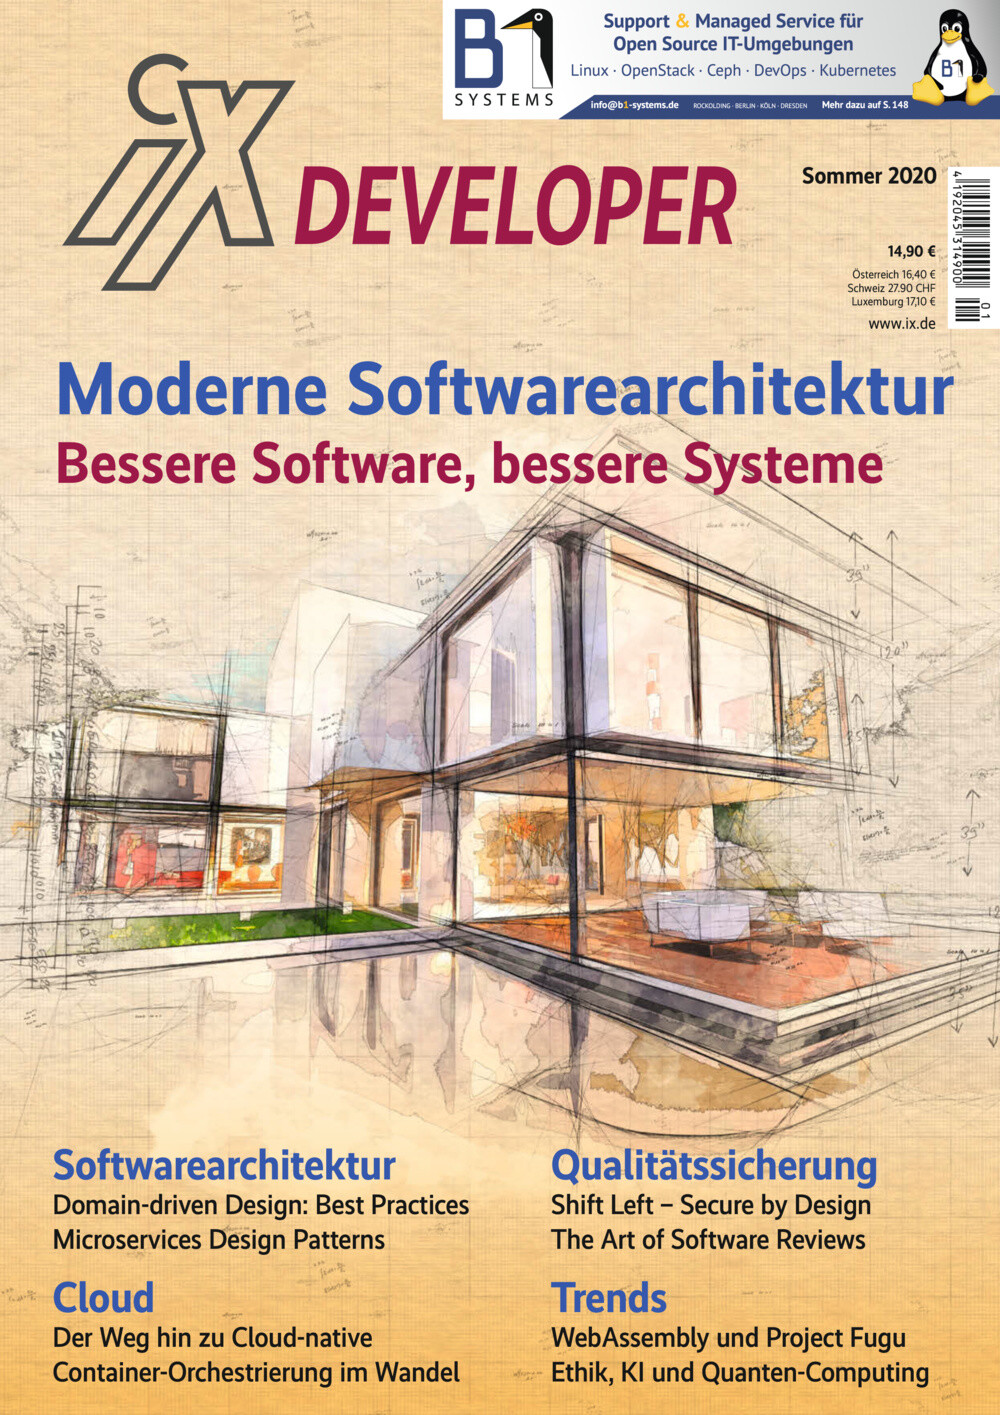 iX Developer Moderne Softwarearchitektur 2020